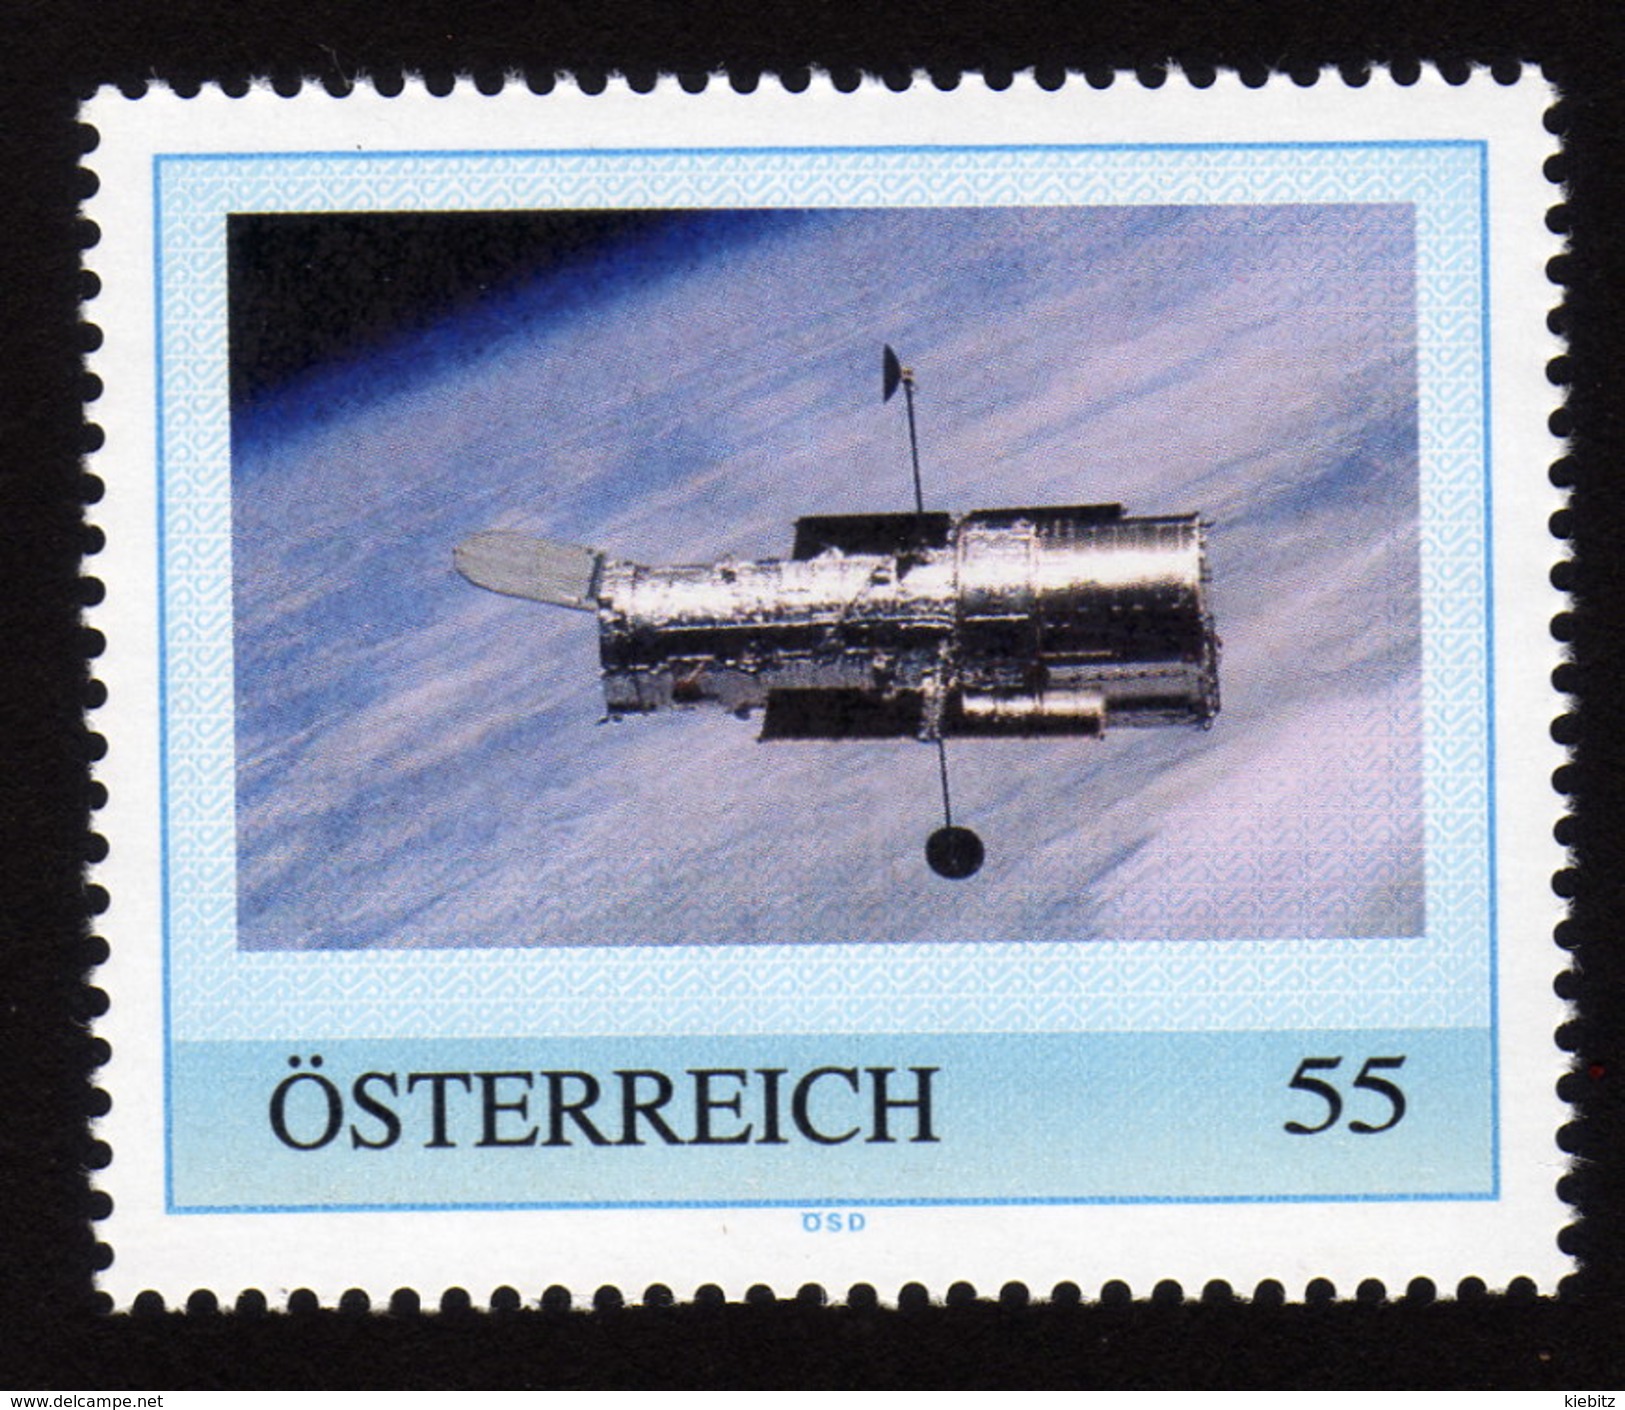 ÖSTERREICH 2009 ** Hubble Space Telescope über Der Erde - PM Personalized Stamp MNH - Sterrenkunde